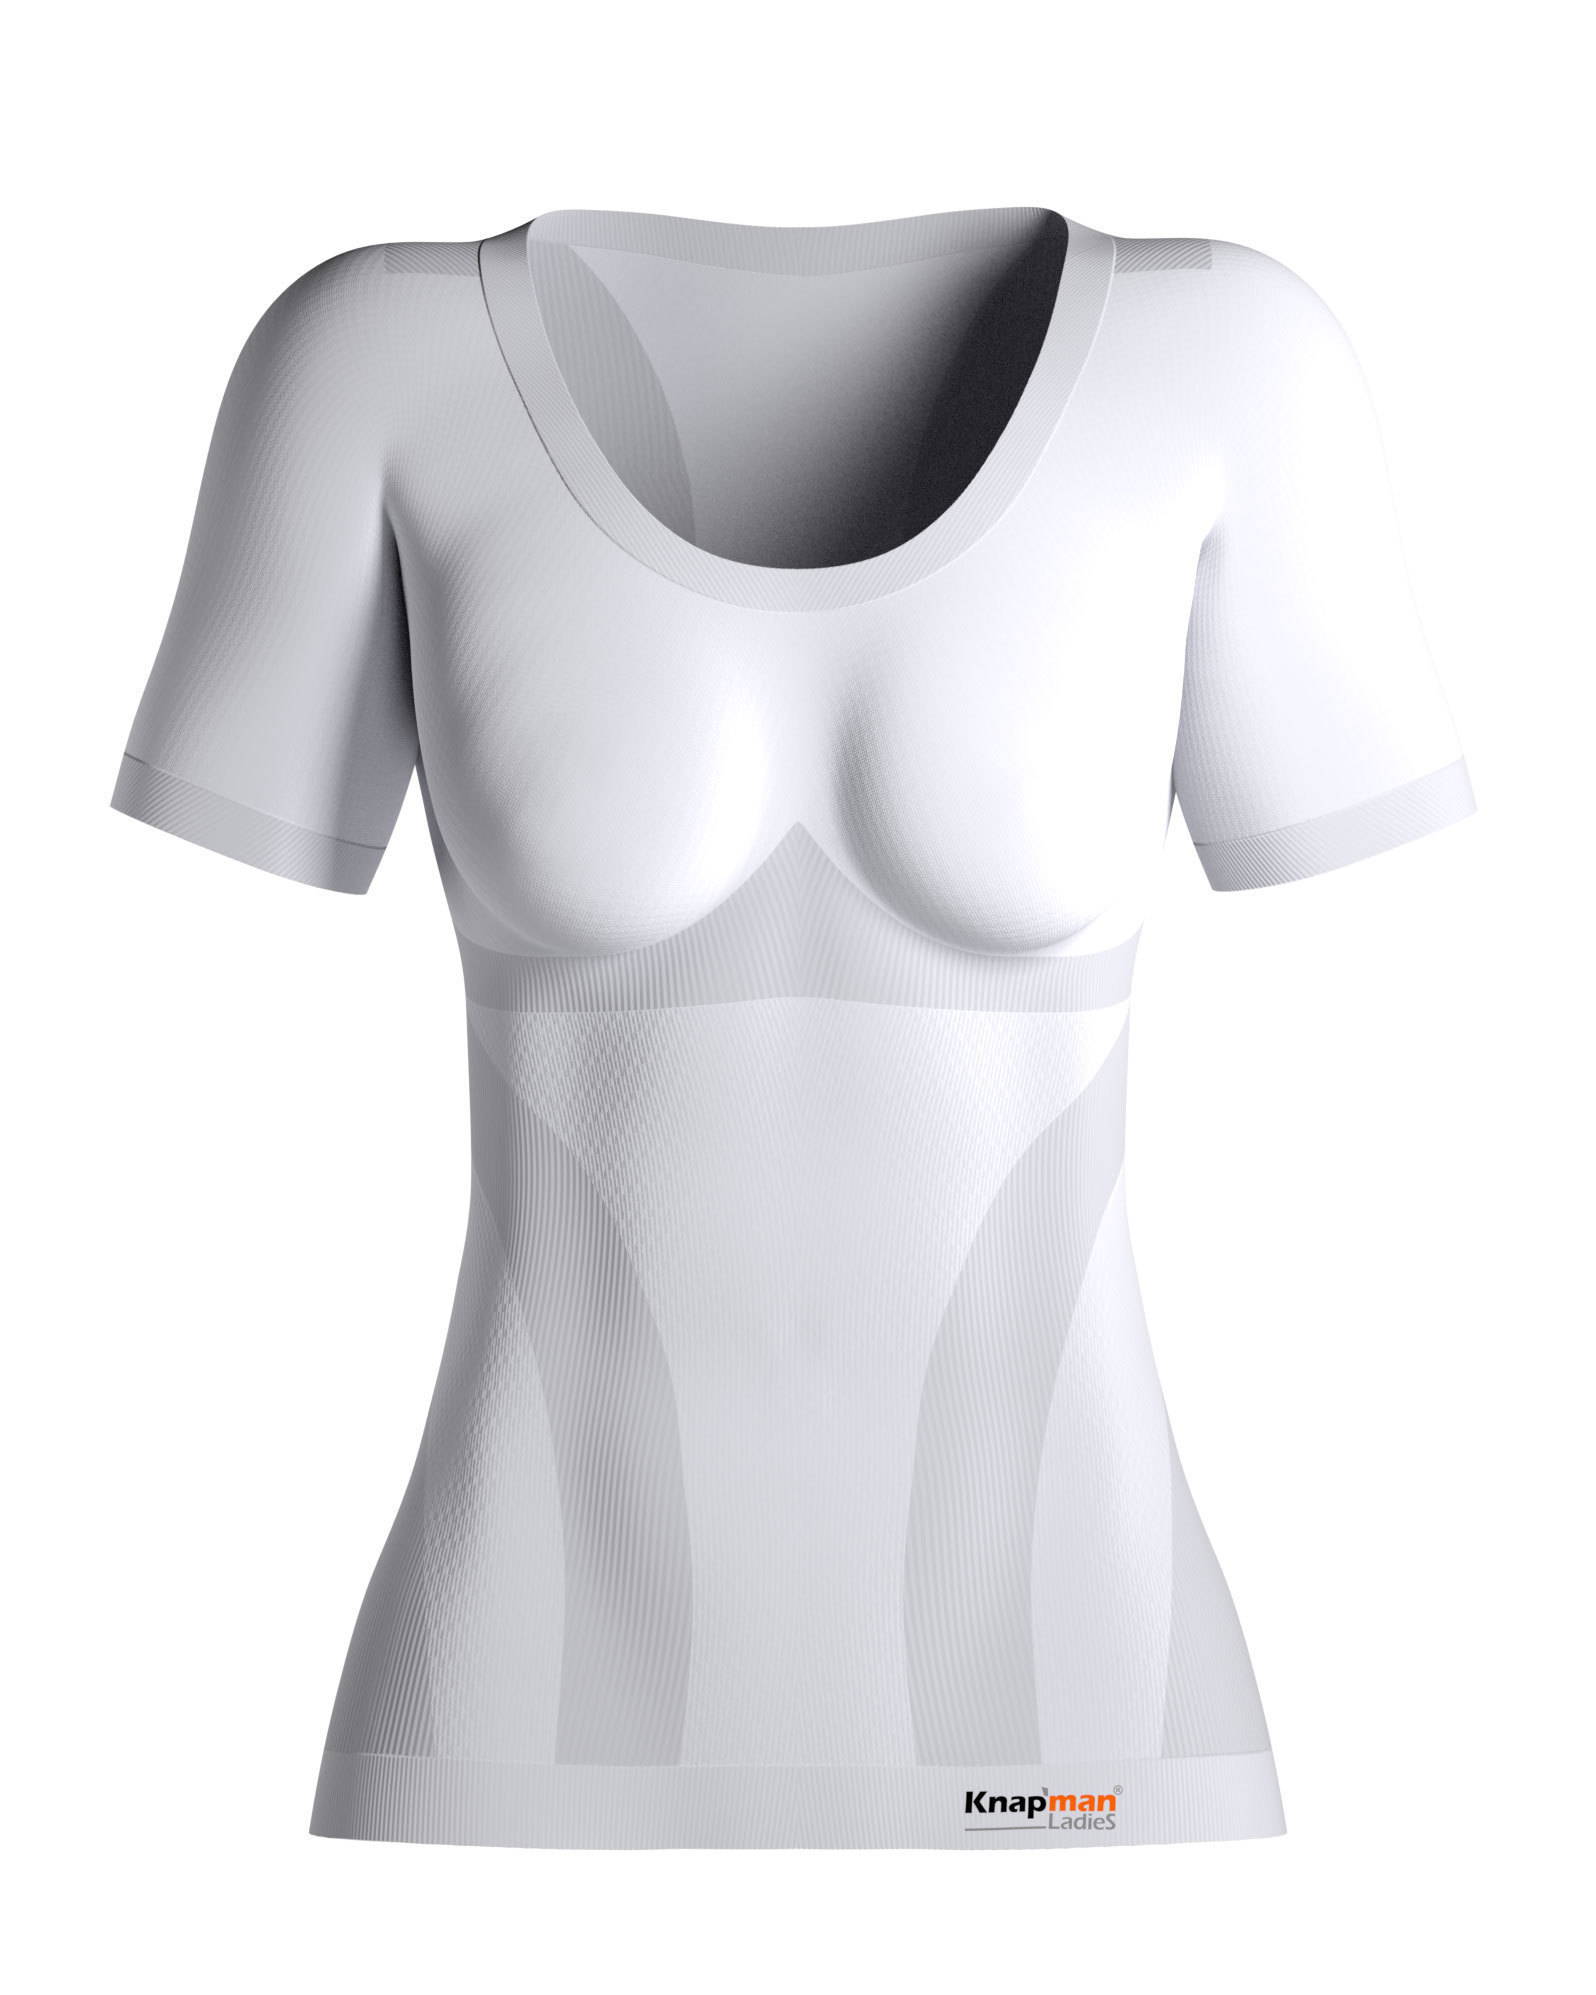 Knap'man Corrigerend Shapewear Shirt voor Vrouwen Wit (Roundneck) 